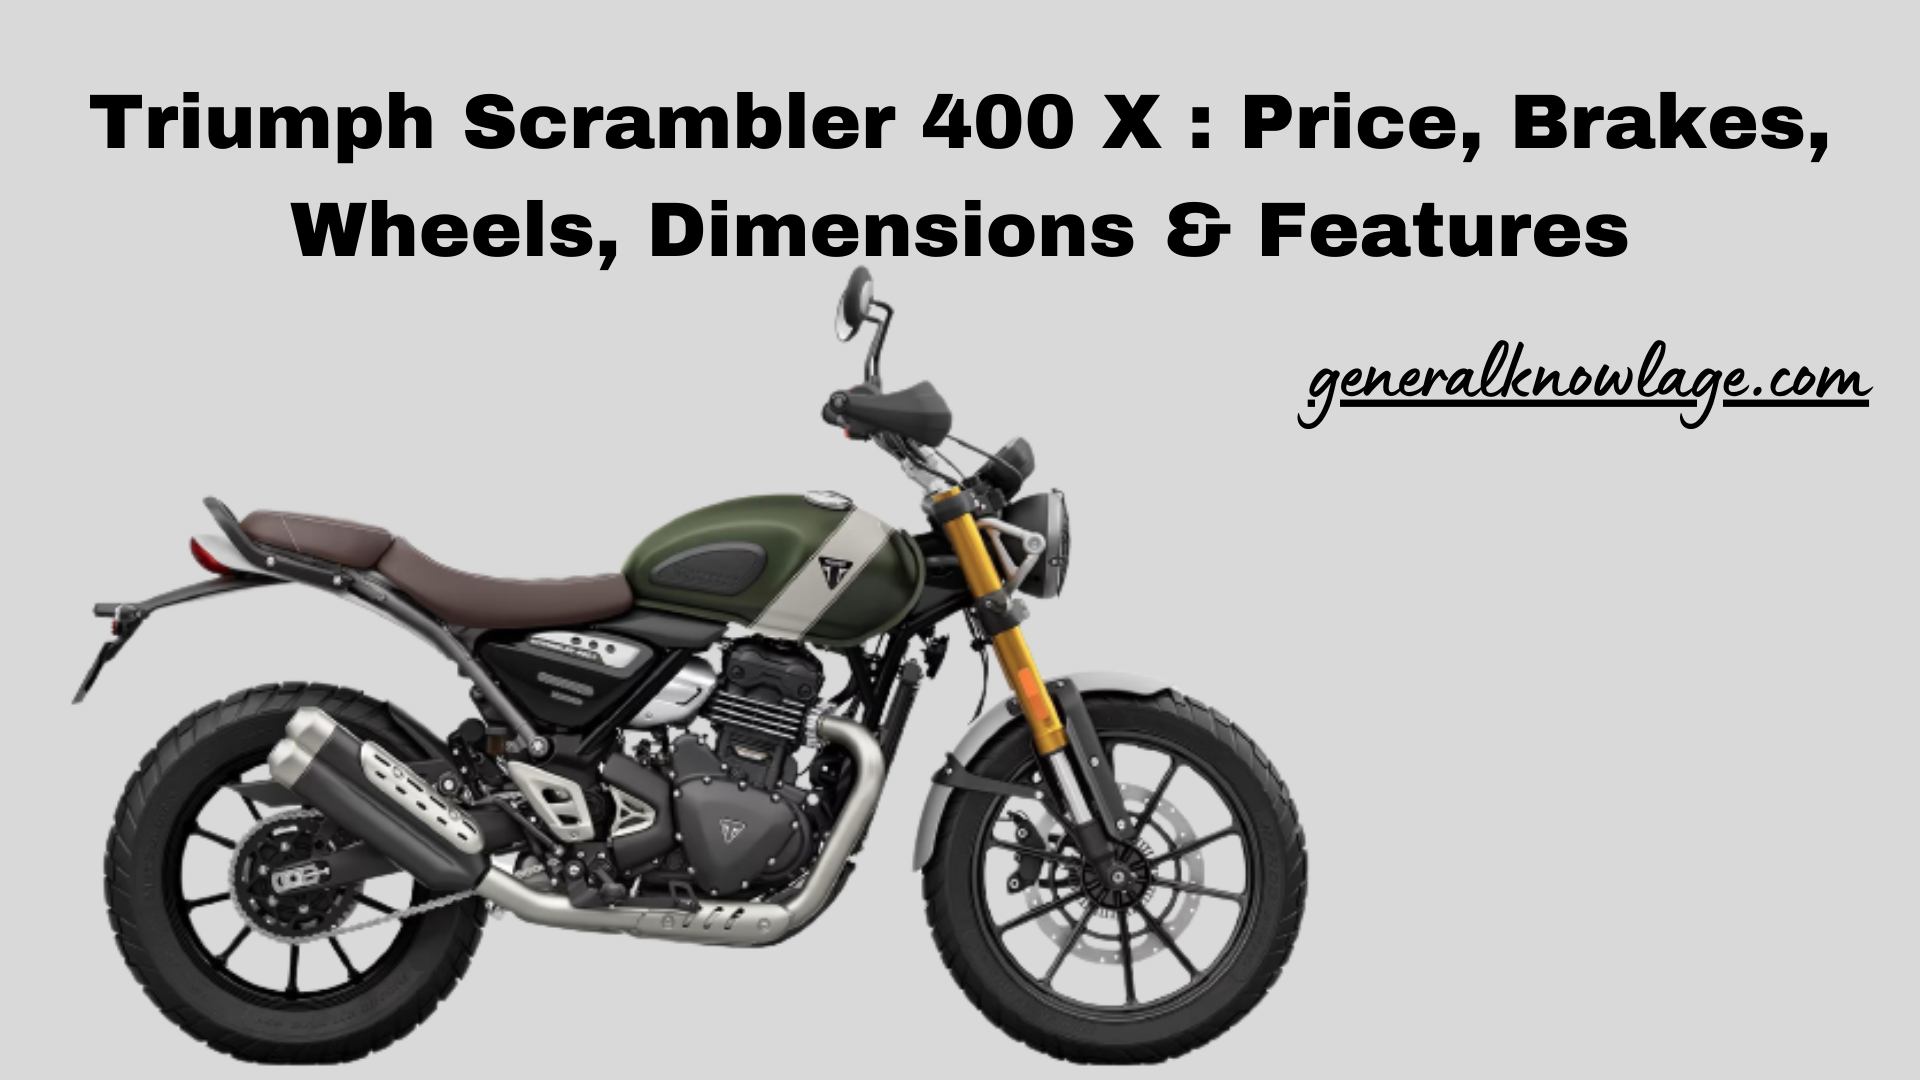 Triumph Scrambler 400 X : Price, Brakes, Wheels, Dimensions & Features